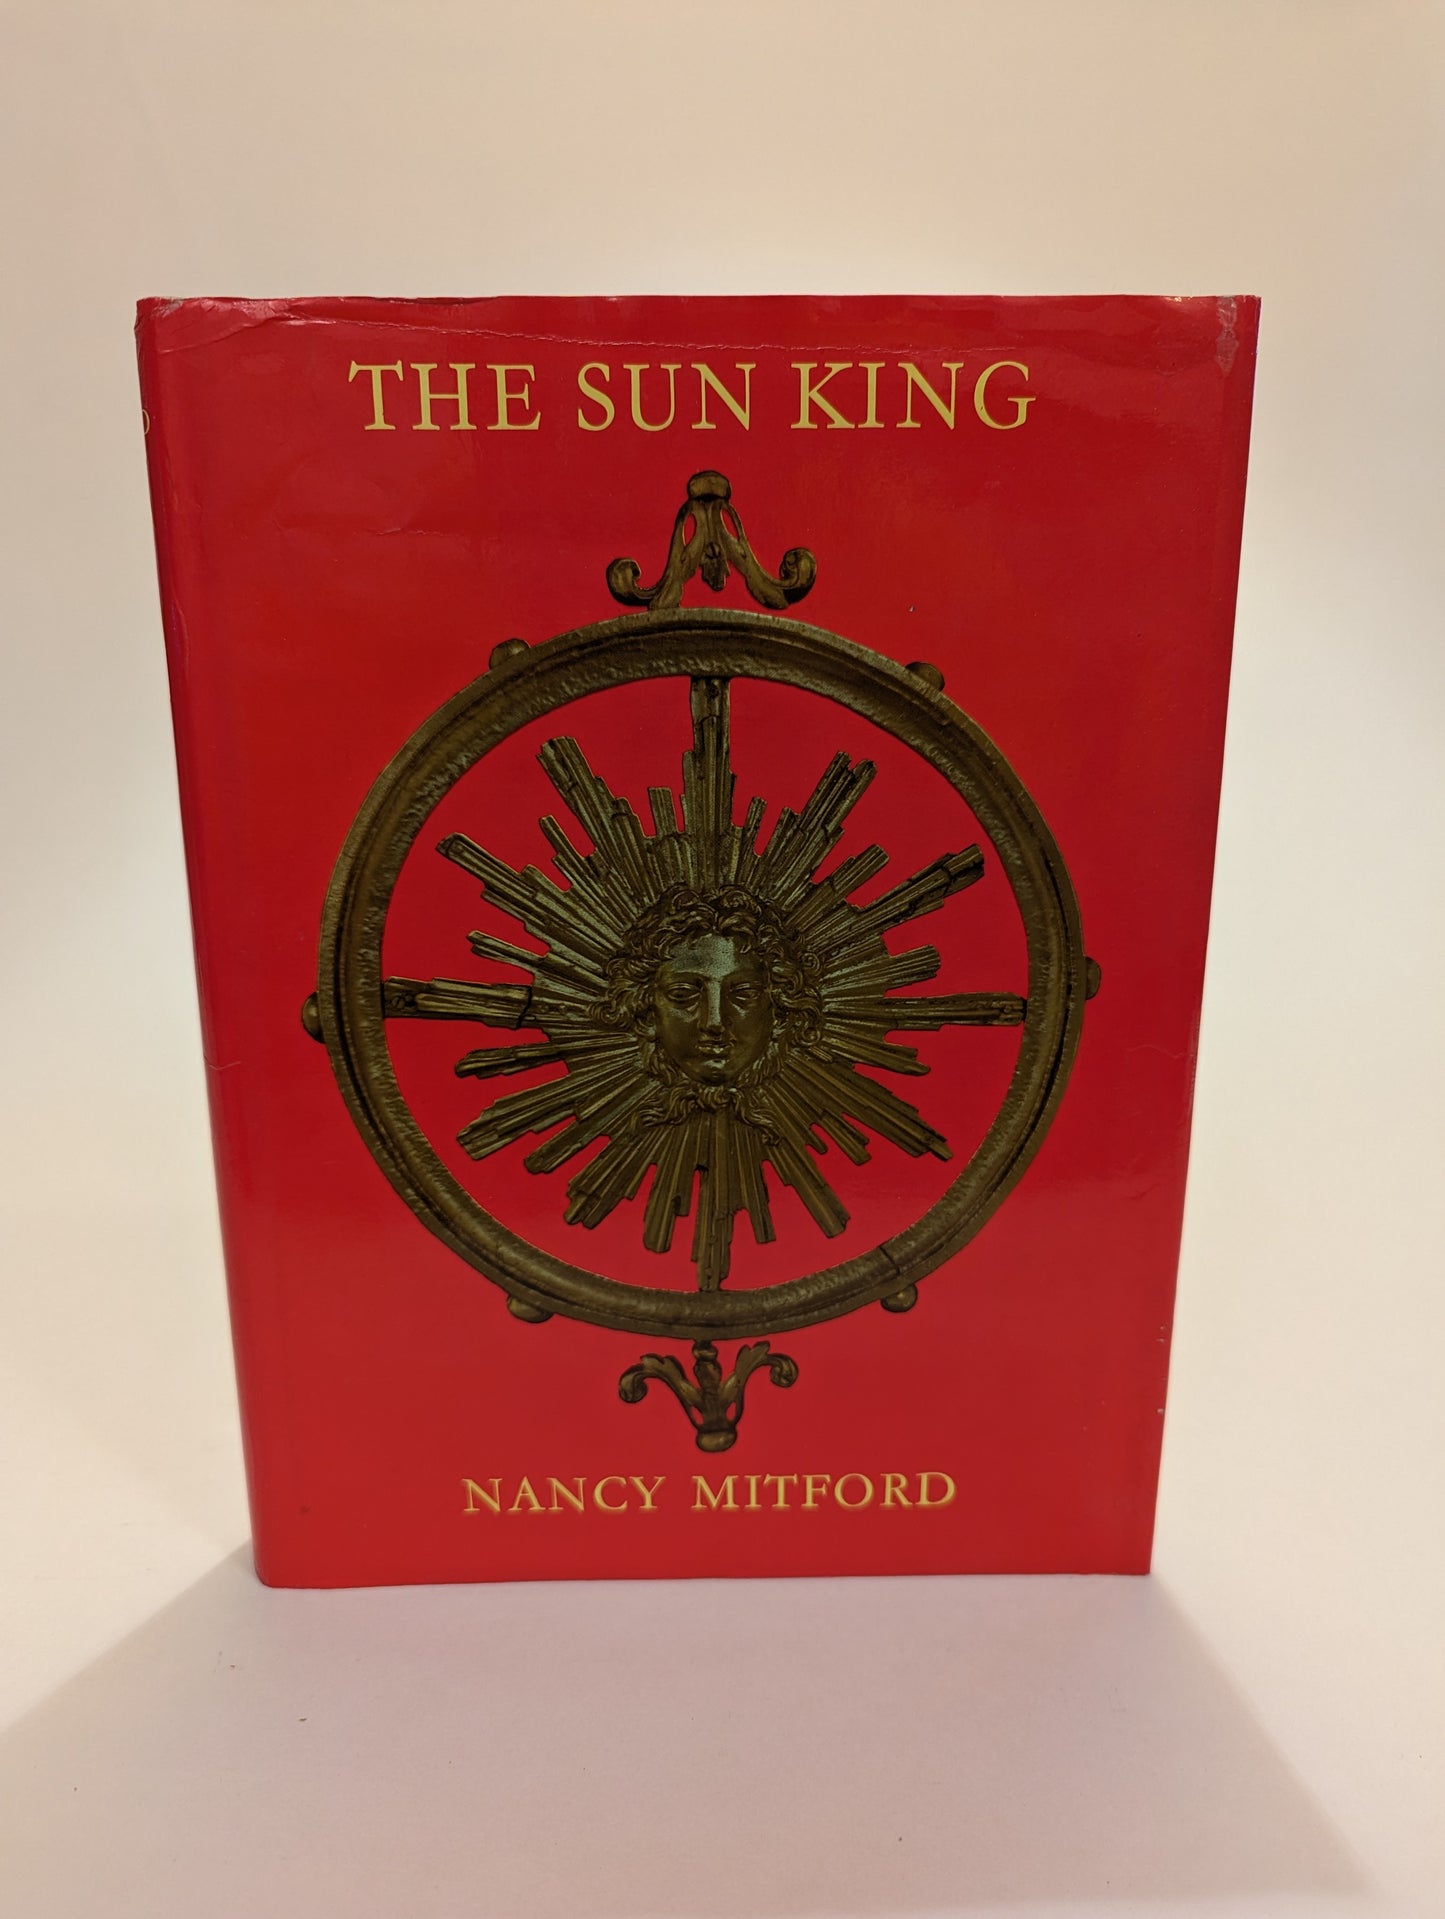 The Sun King [Nancy Mitford]